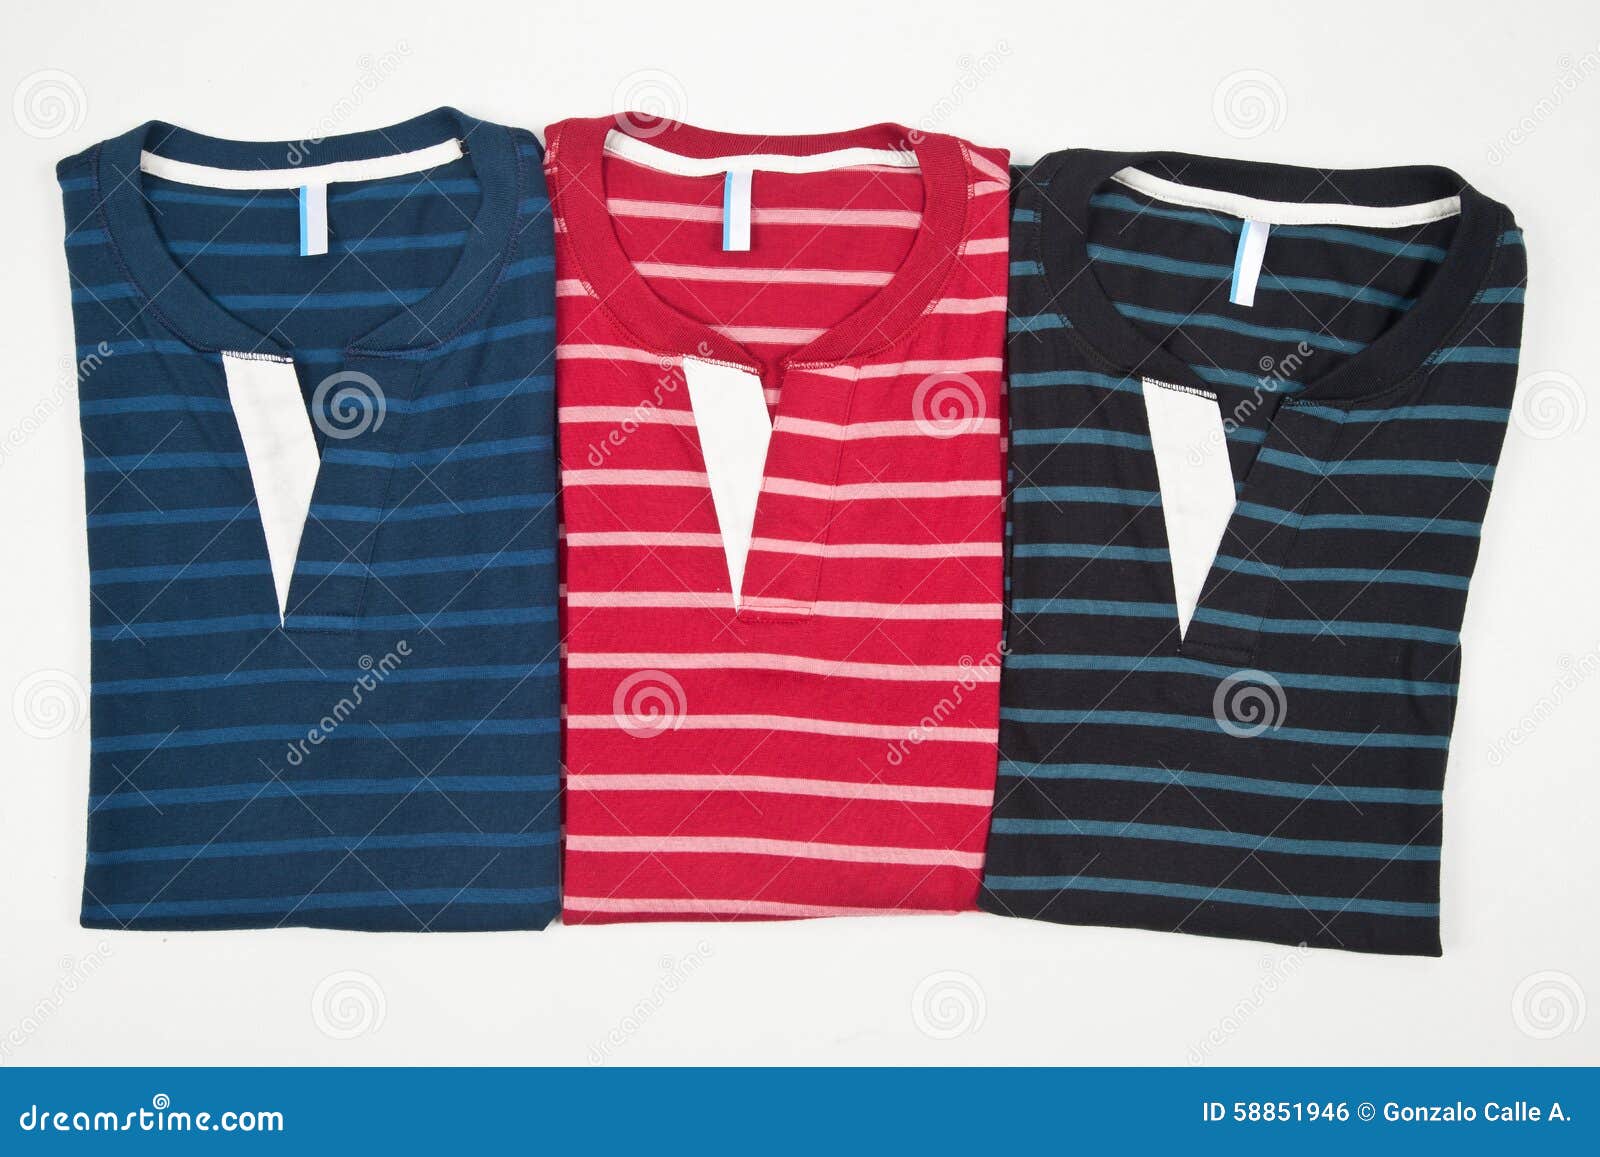 Set of Three Striped Tshirts for Men on White Background Stock Photo ...